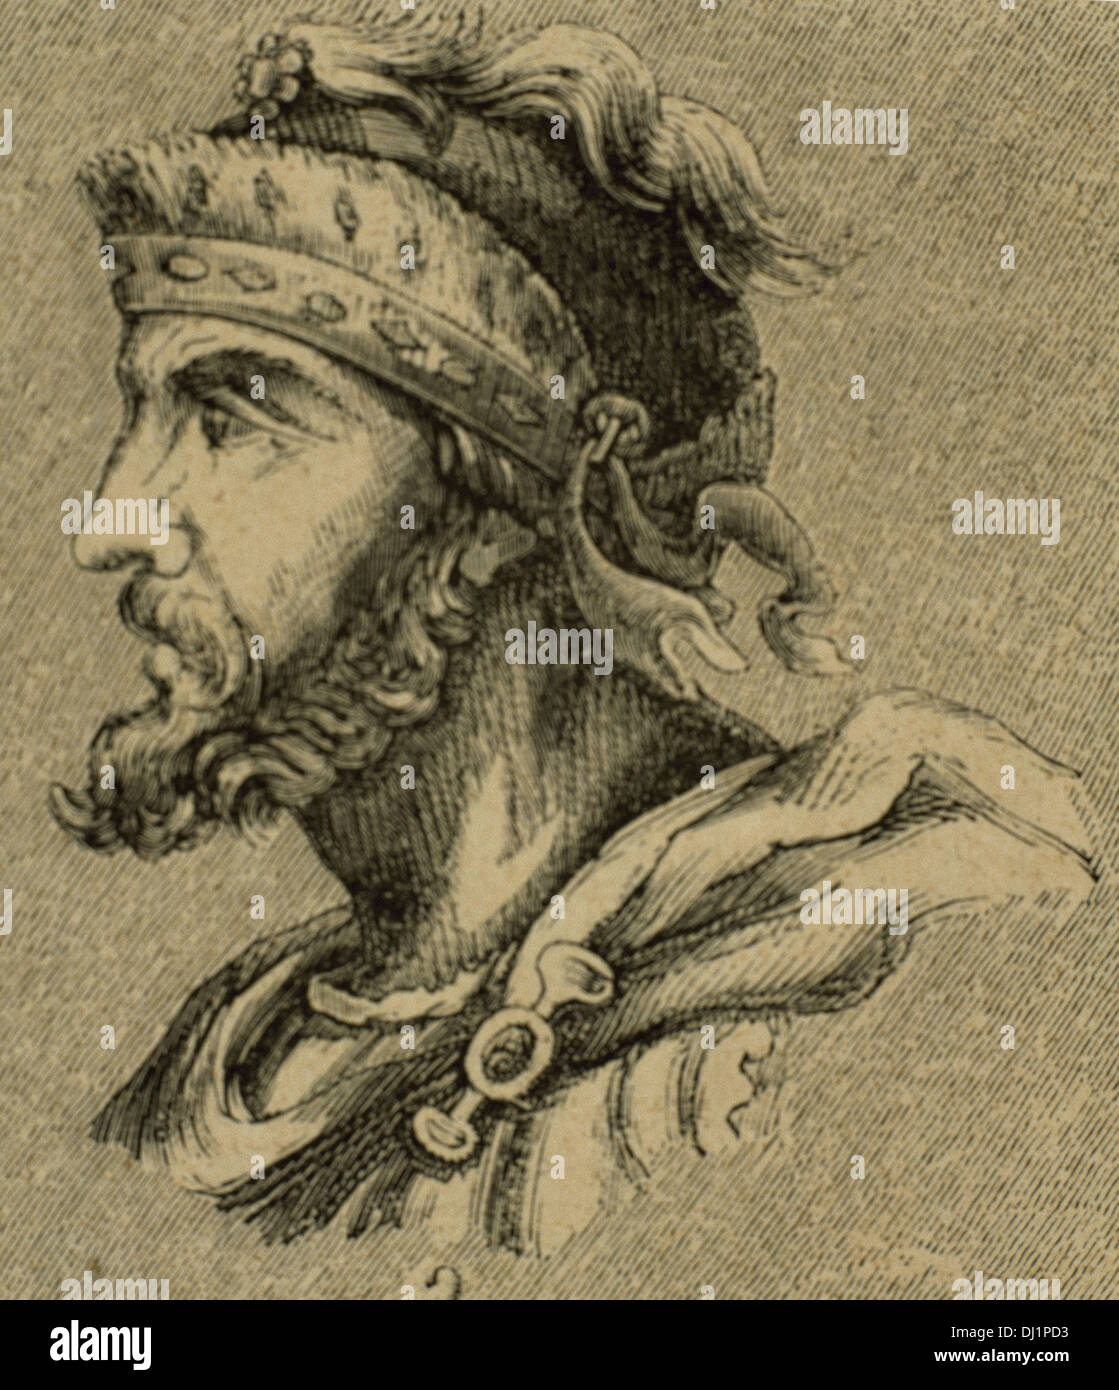 Athanagild (died 567). Visigothic King of Hispania and Septimania. Engraving. Stock Photo